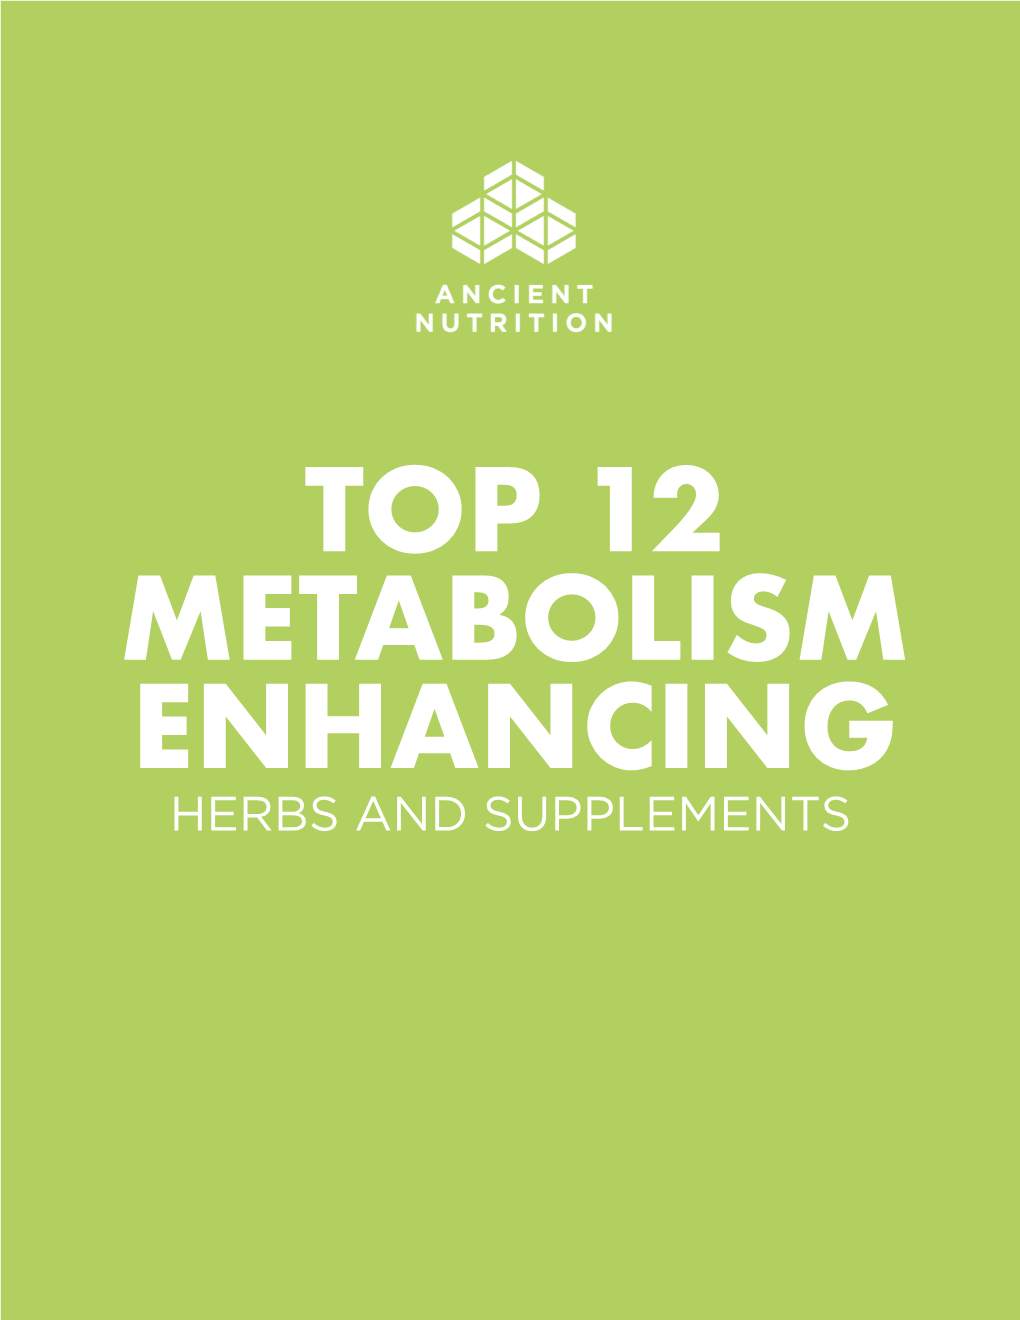 Top 12 Metabolism Enhancing Herbs and Supplements Matcha 1 Green Tea